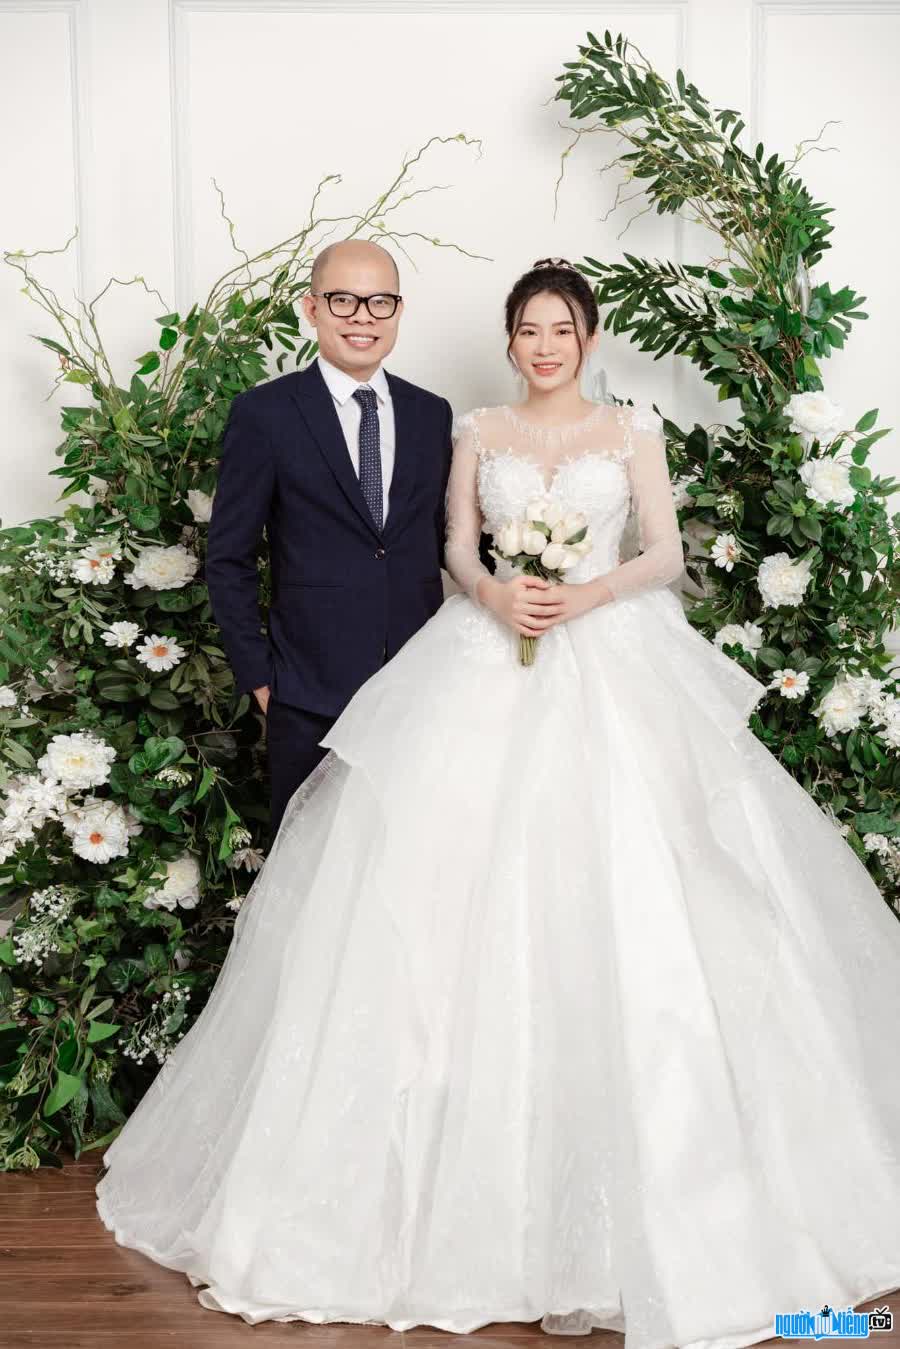 CEO Le Hai Linh with wife